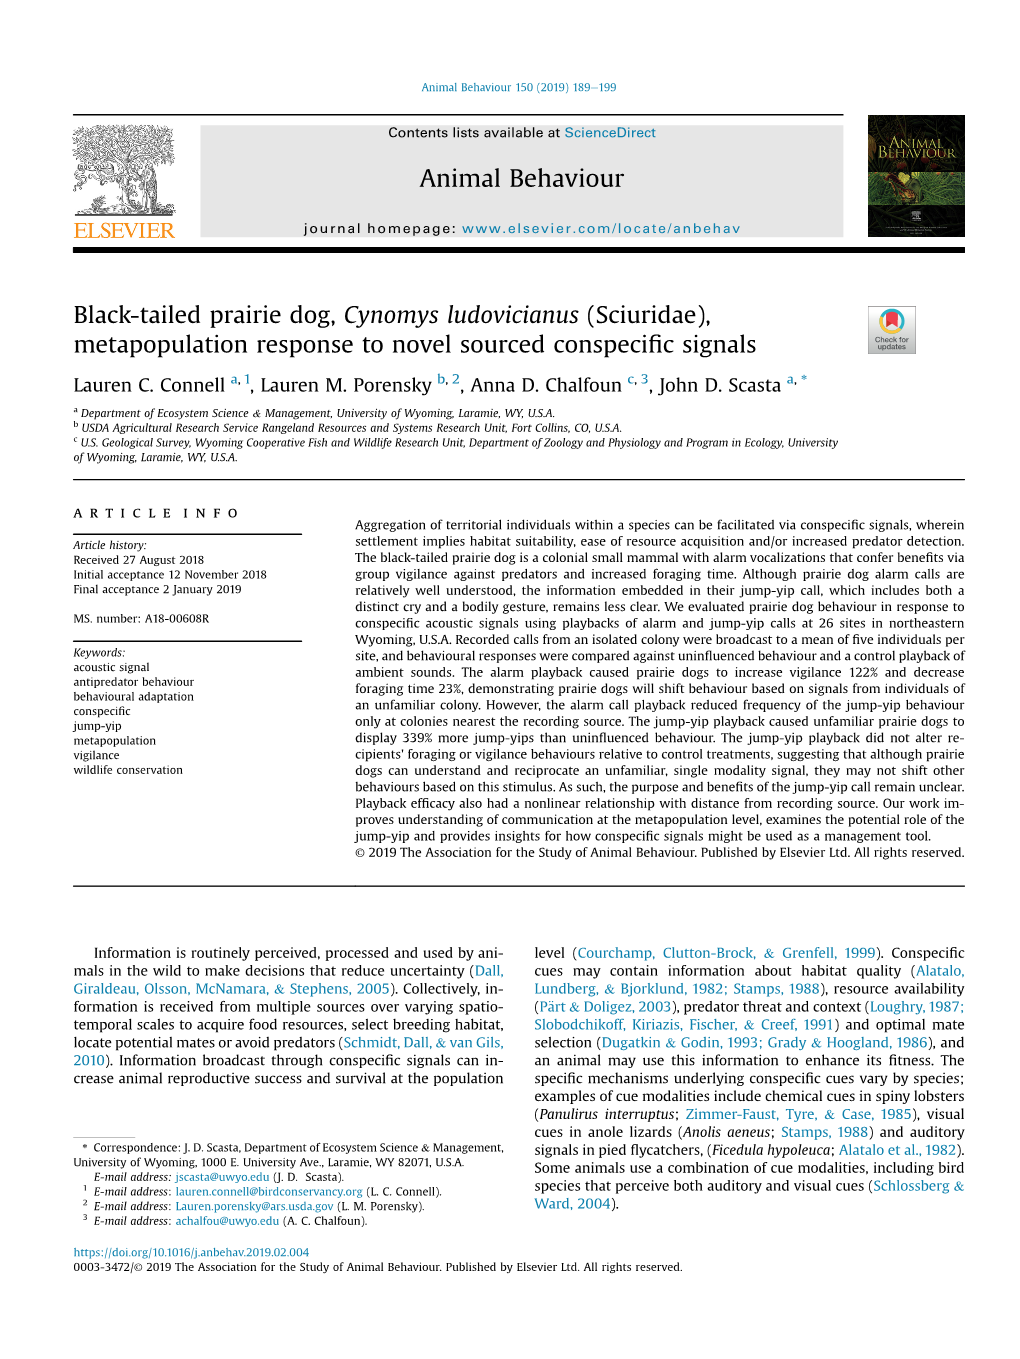 Black-Tailed Prairie Dog, Cynomys Ludovicianus (Sciuridae), Metapopulation Response to Novel Sourced Conspeciﬁc Signals